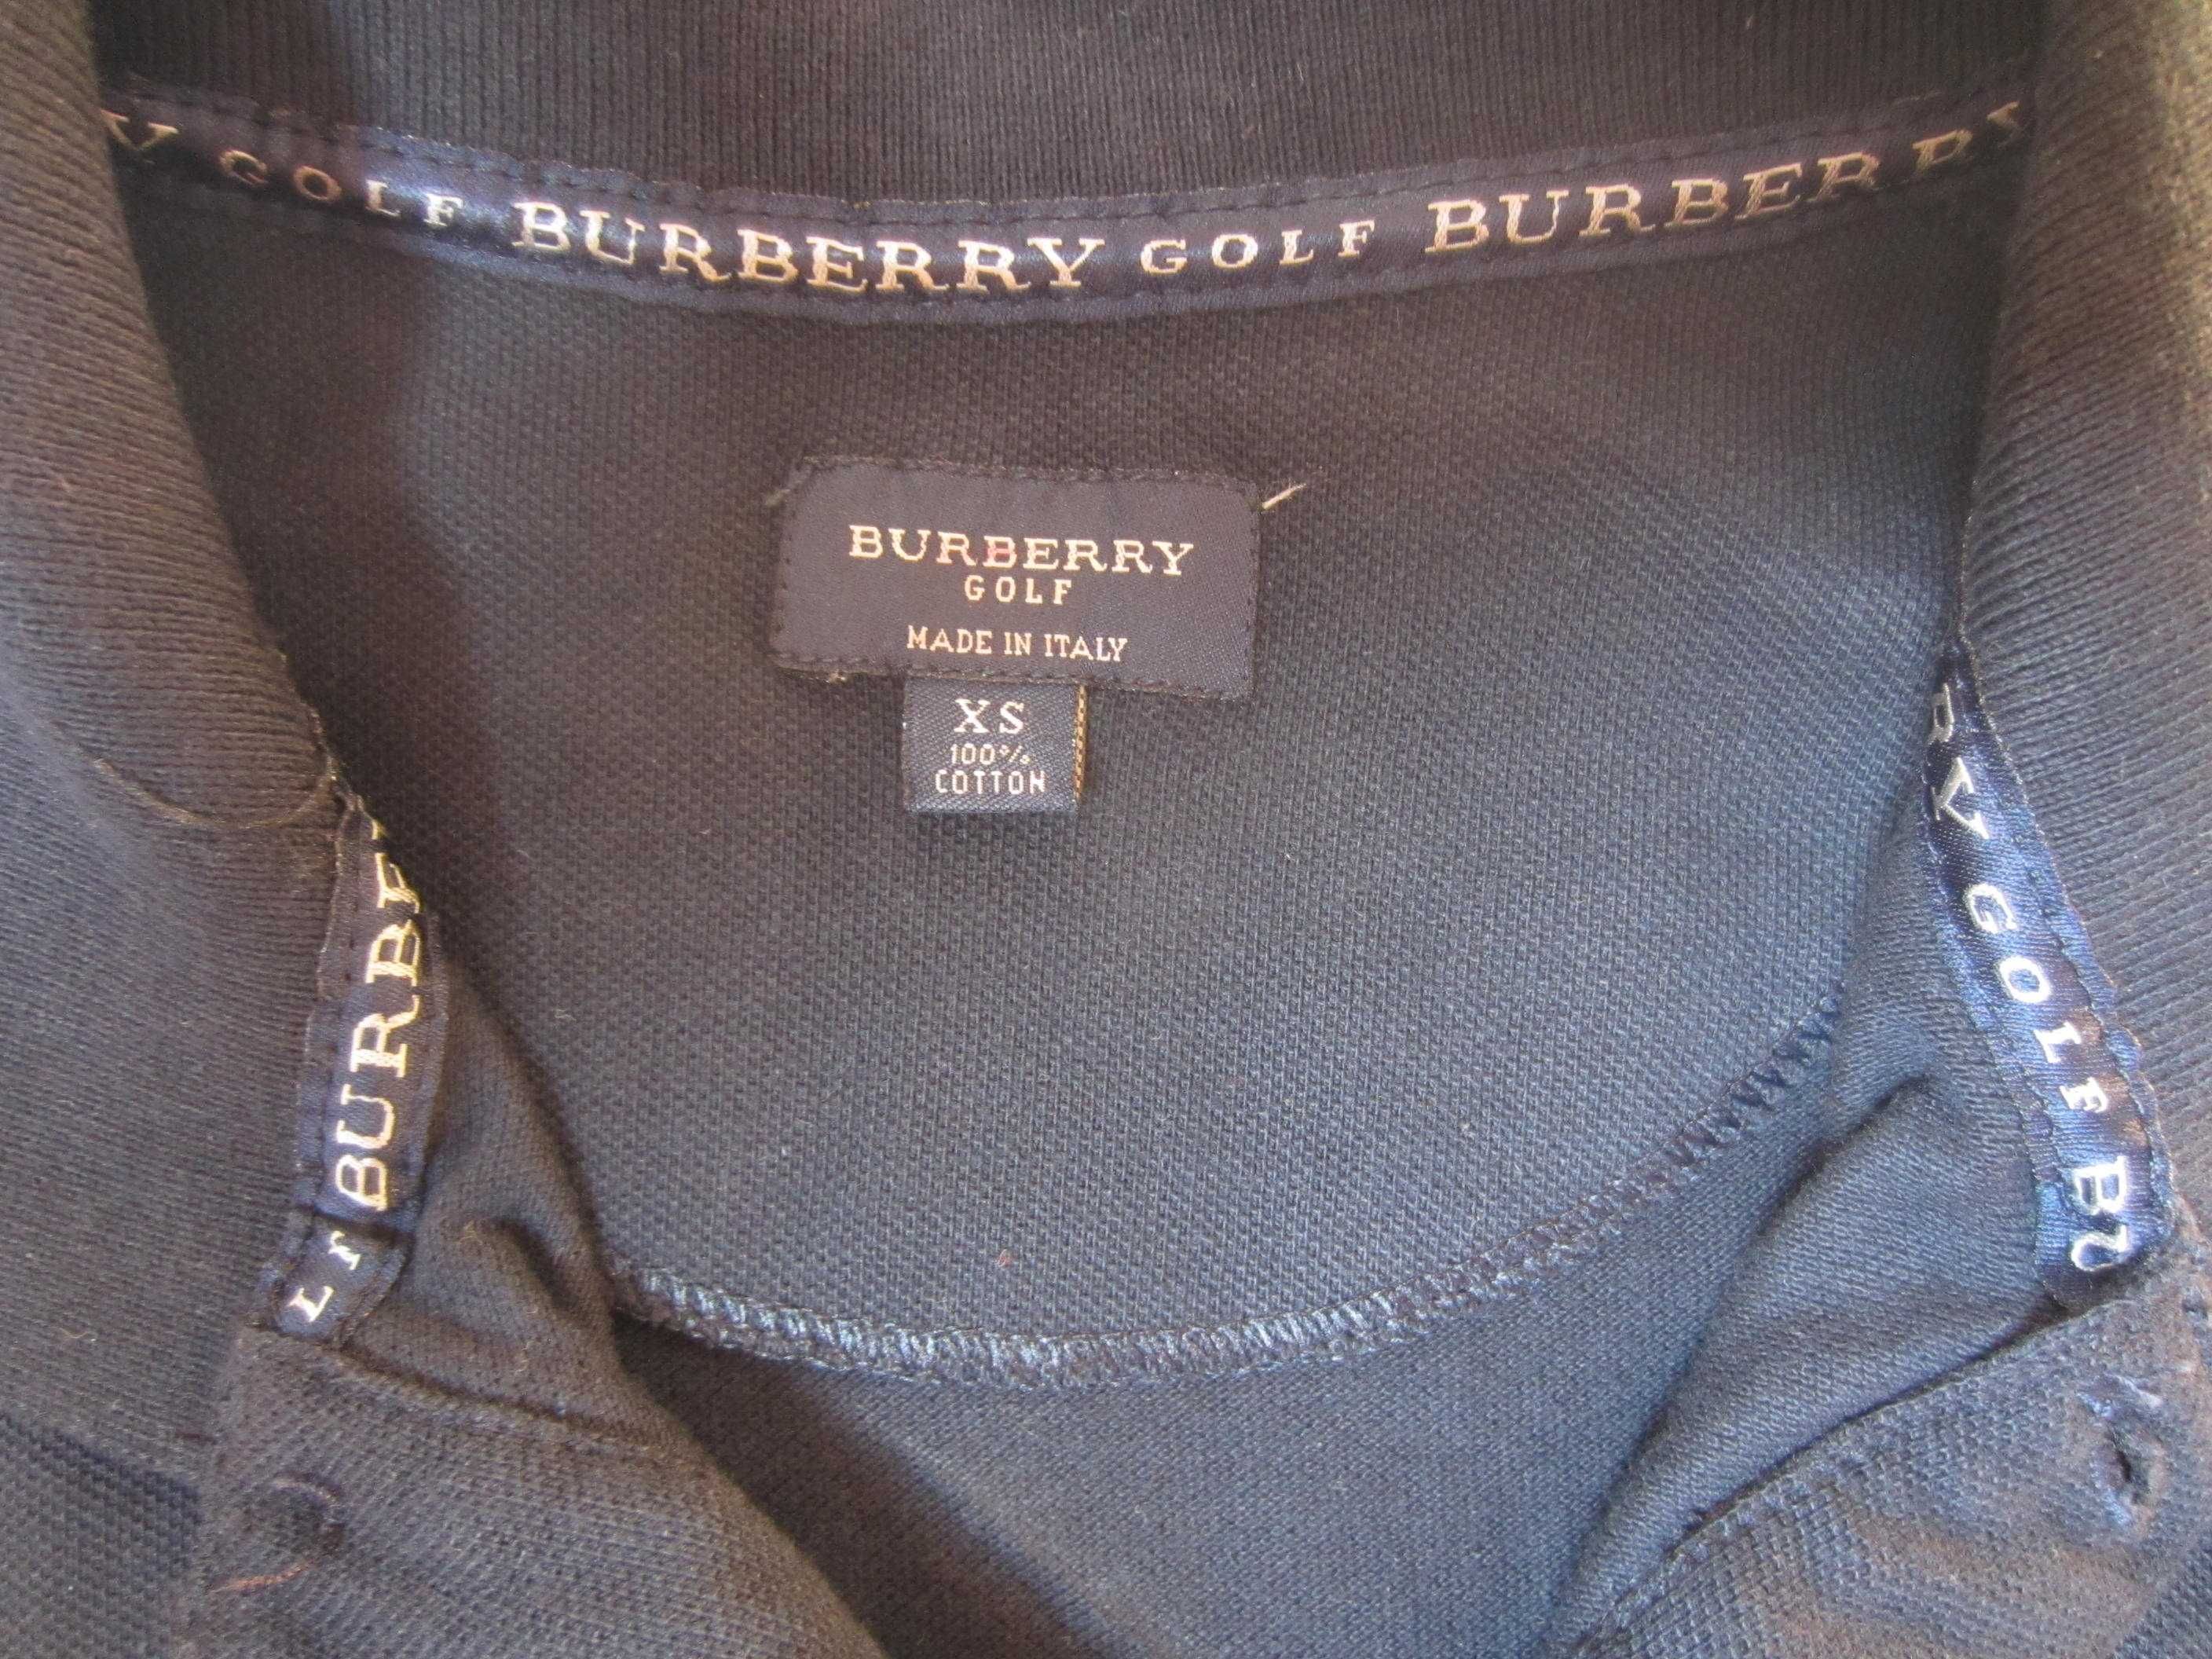 Tricou Burberry Golf, masura S, stare f. buna